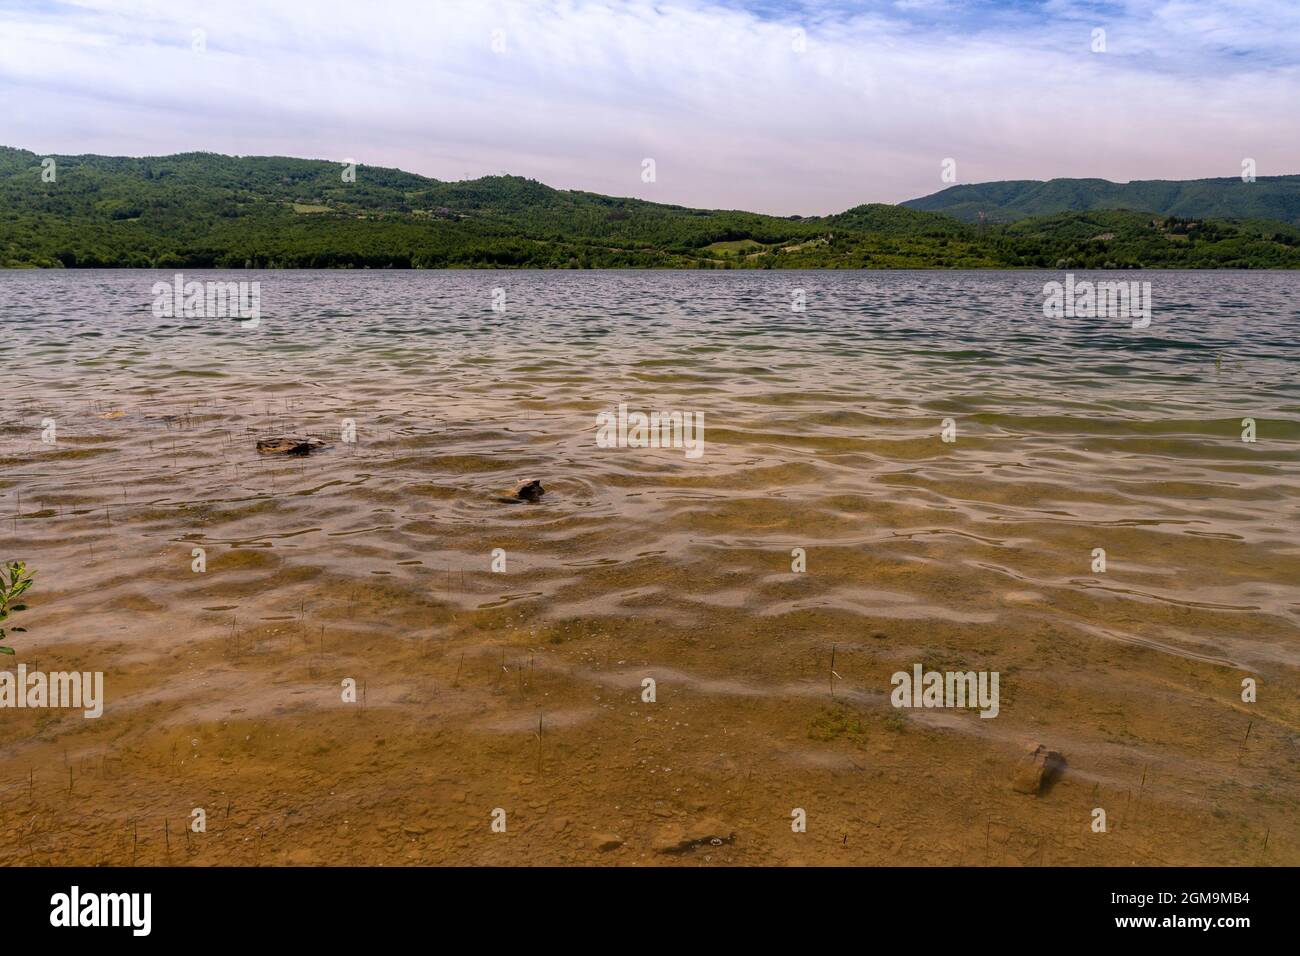 View of the Bilancino lake in Mugello in Tuscany - Italy Stock Photo